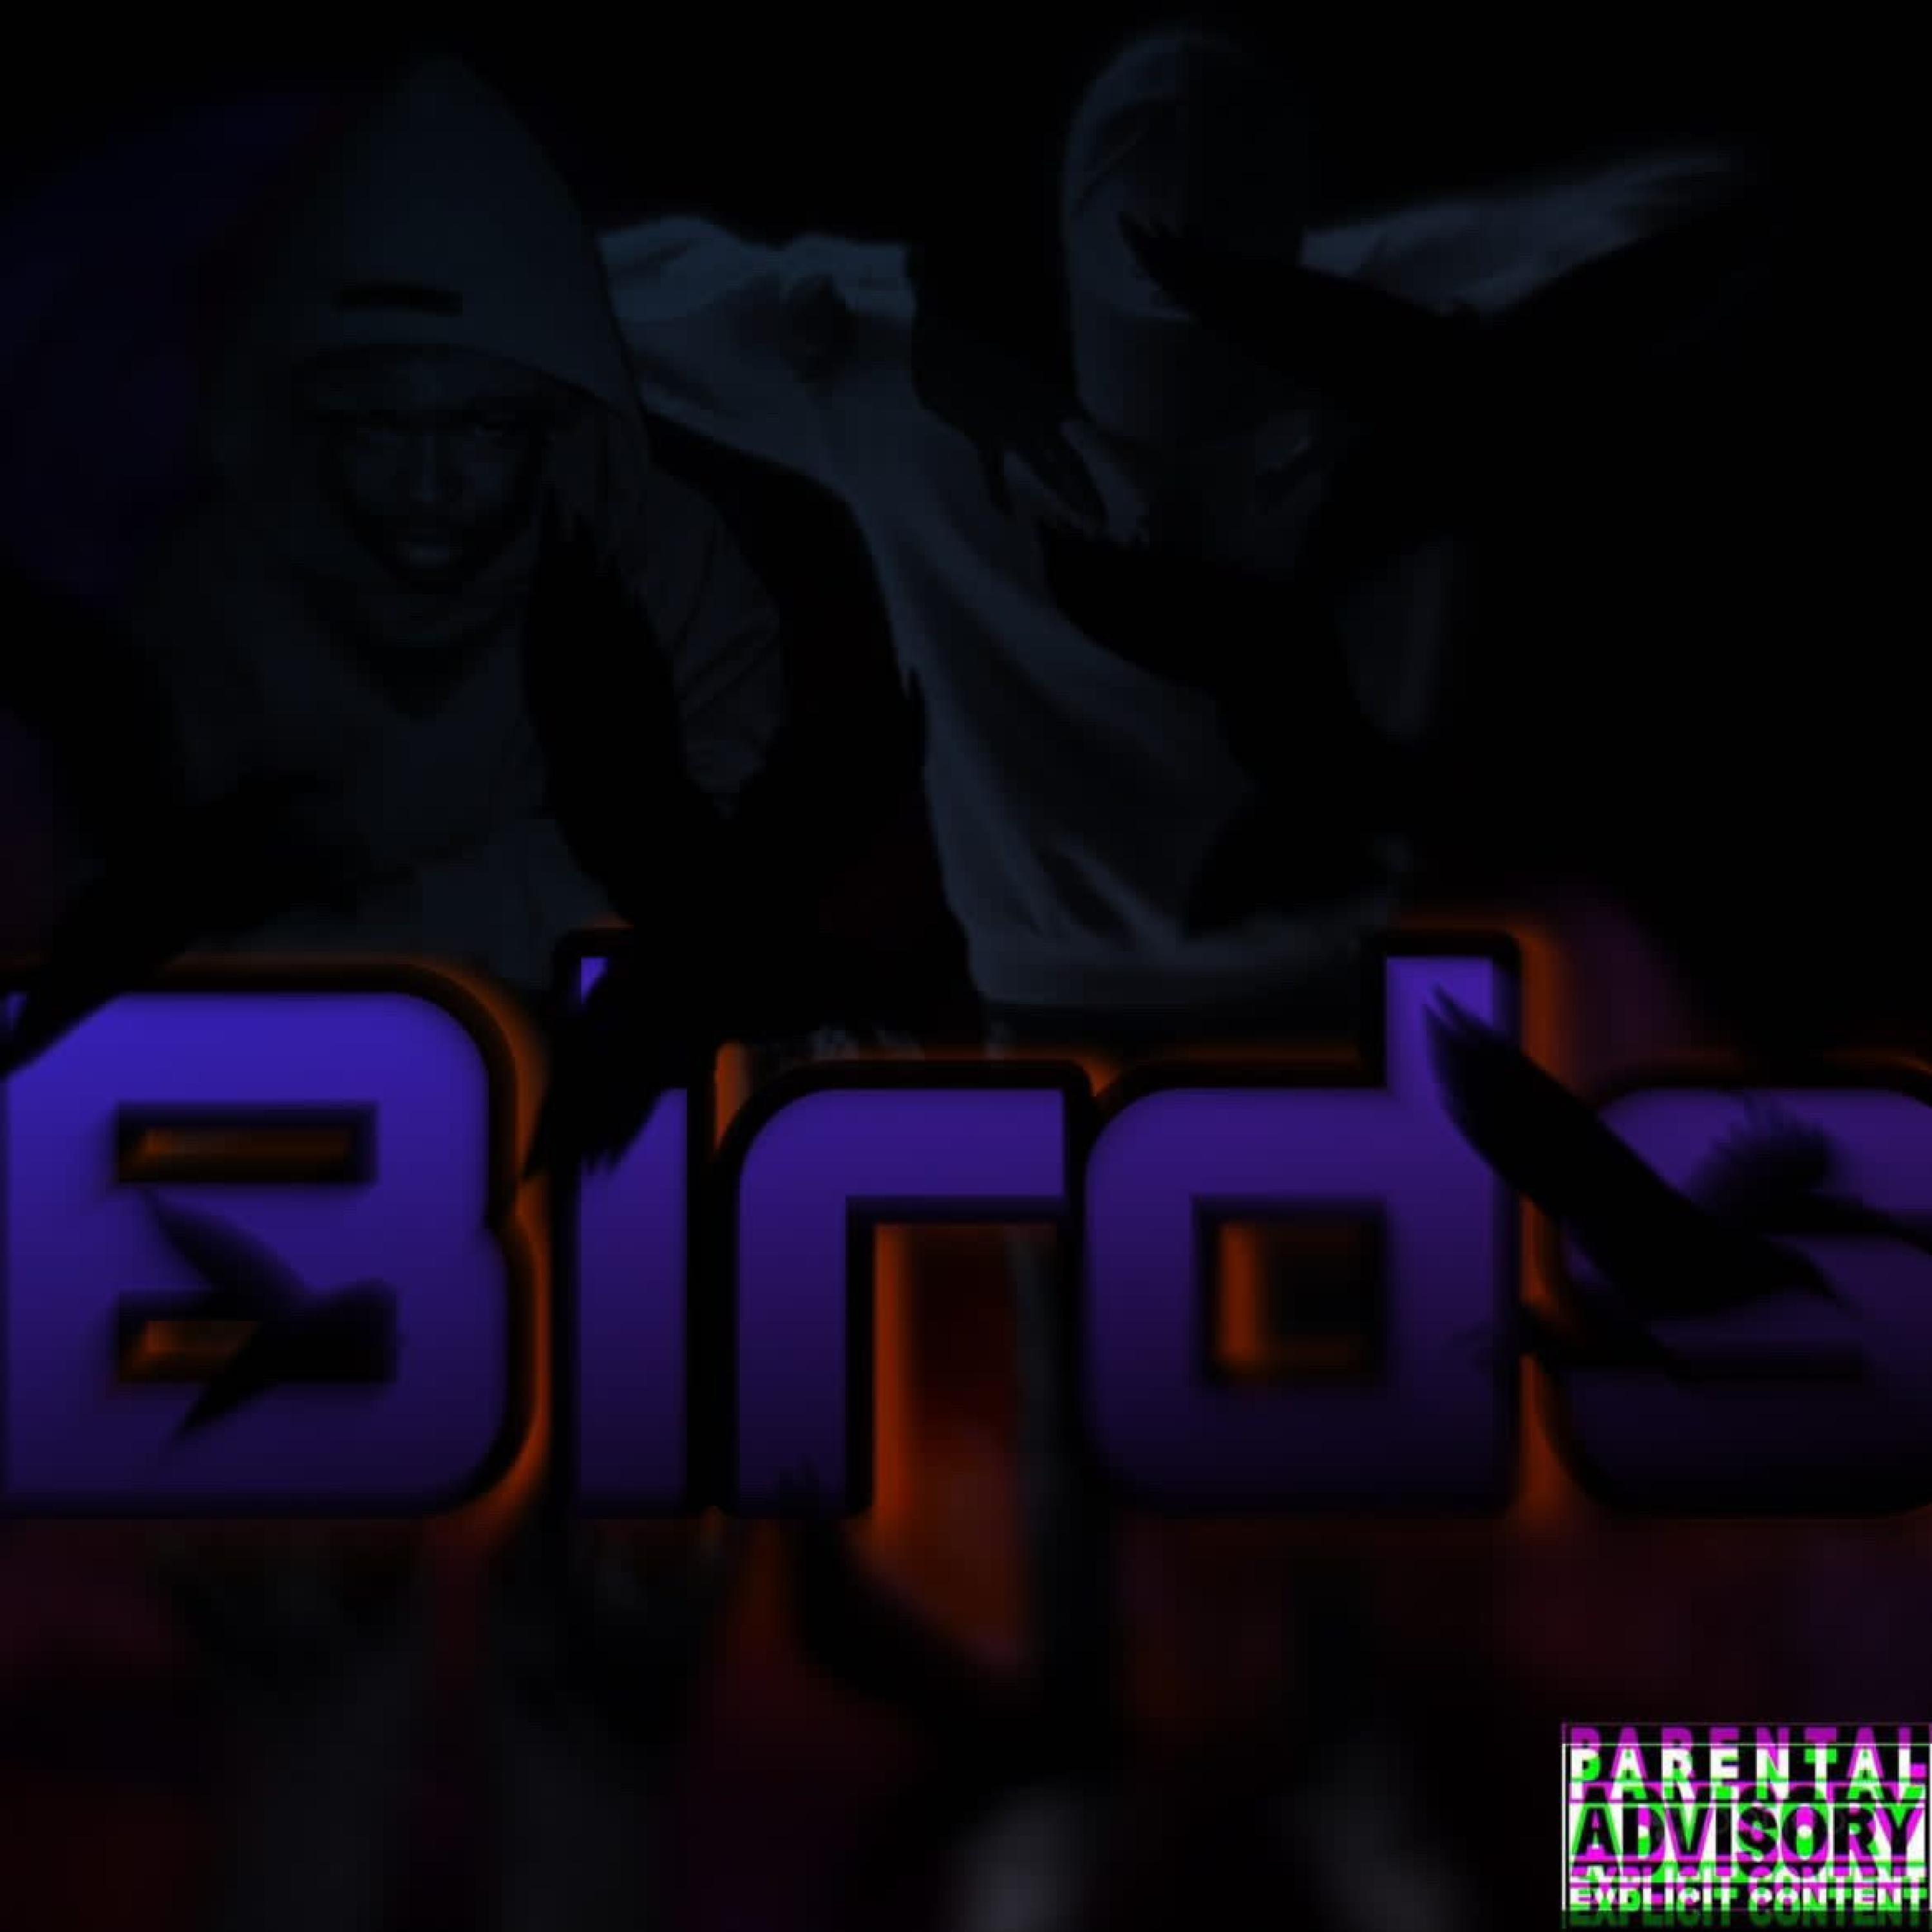 Hesi2x - Birds (feat. Realer)